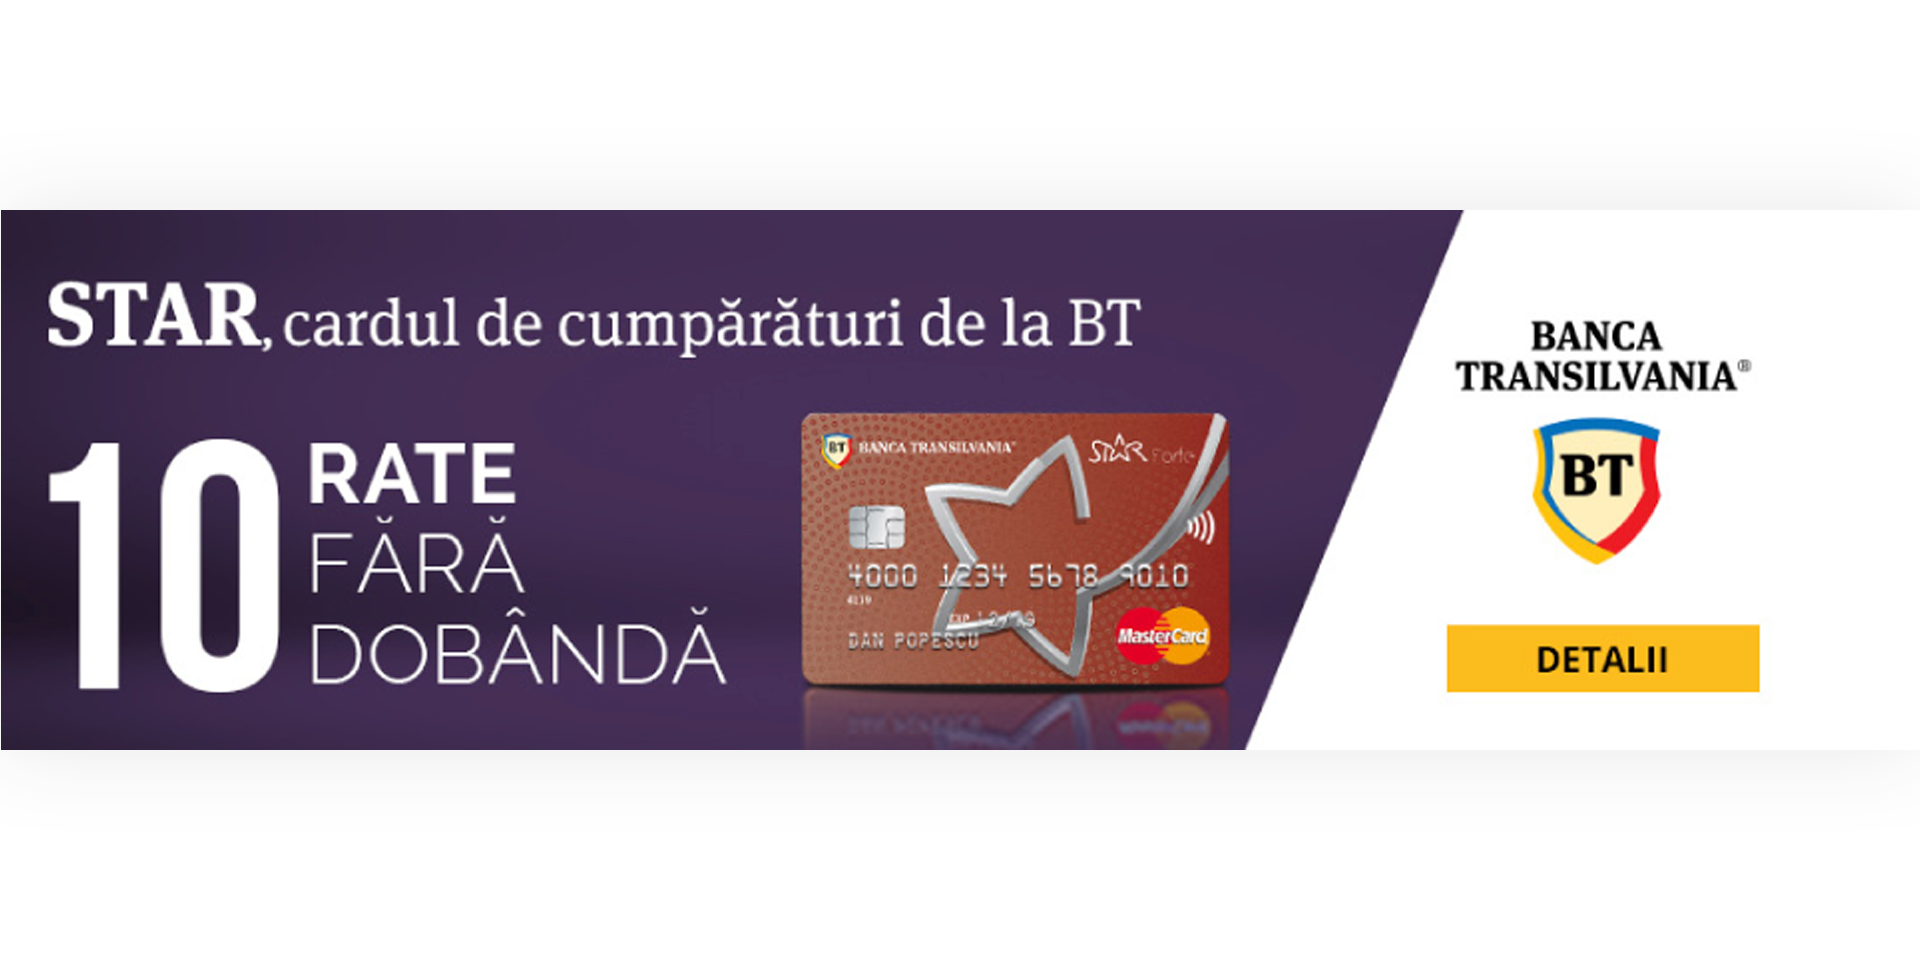 20220622_Banca_Transilvania_banner_card_Star_1920x960